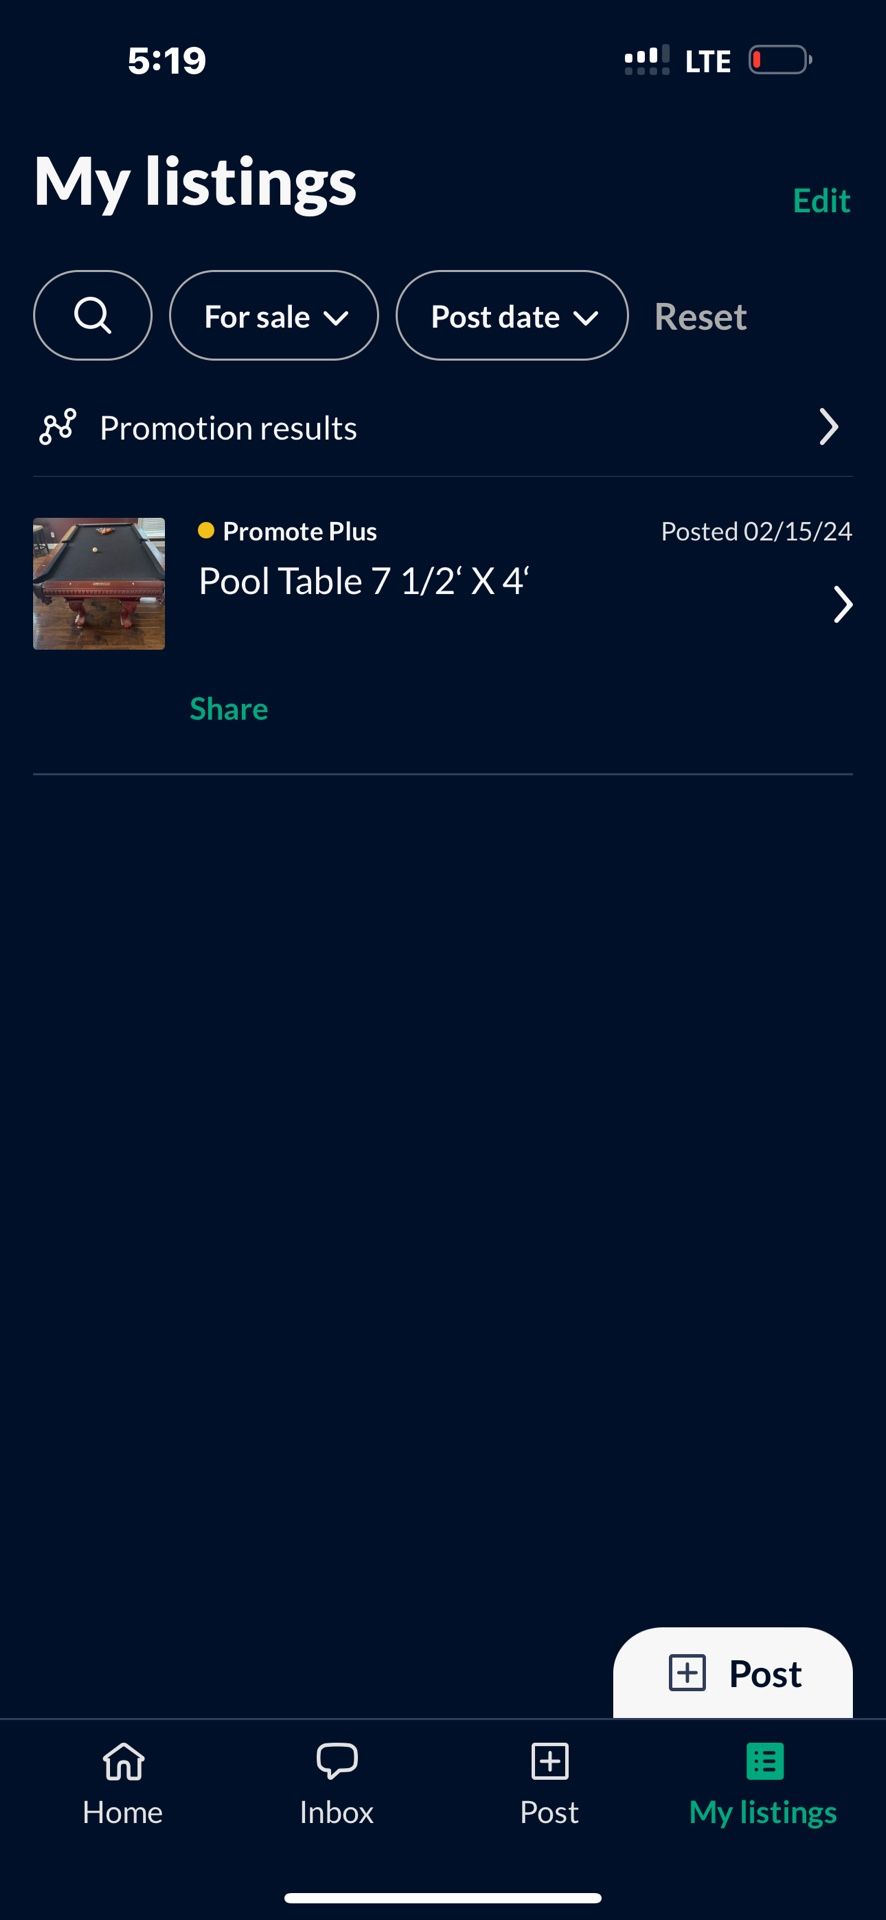 Pool Table 7 1/2‘ X 4‘